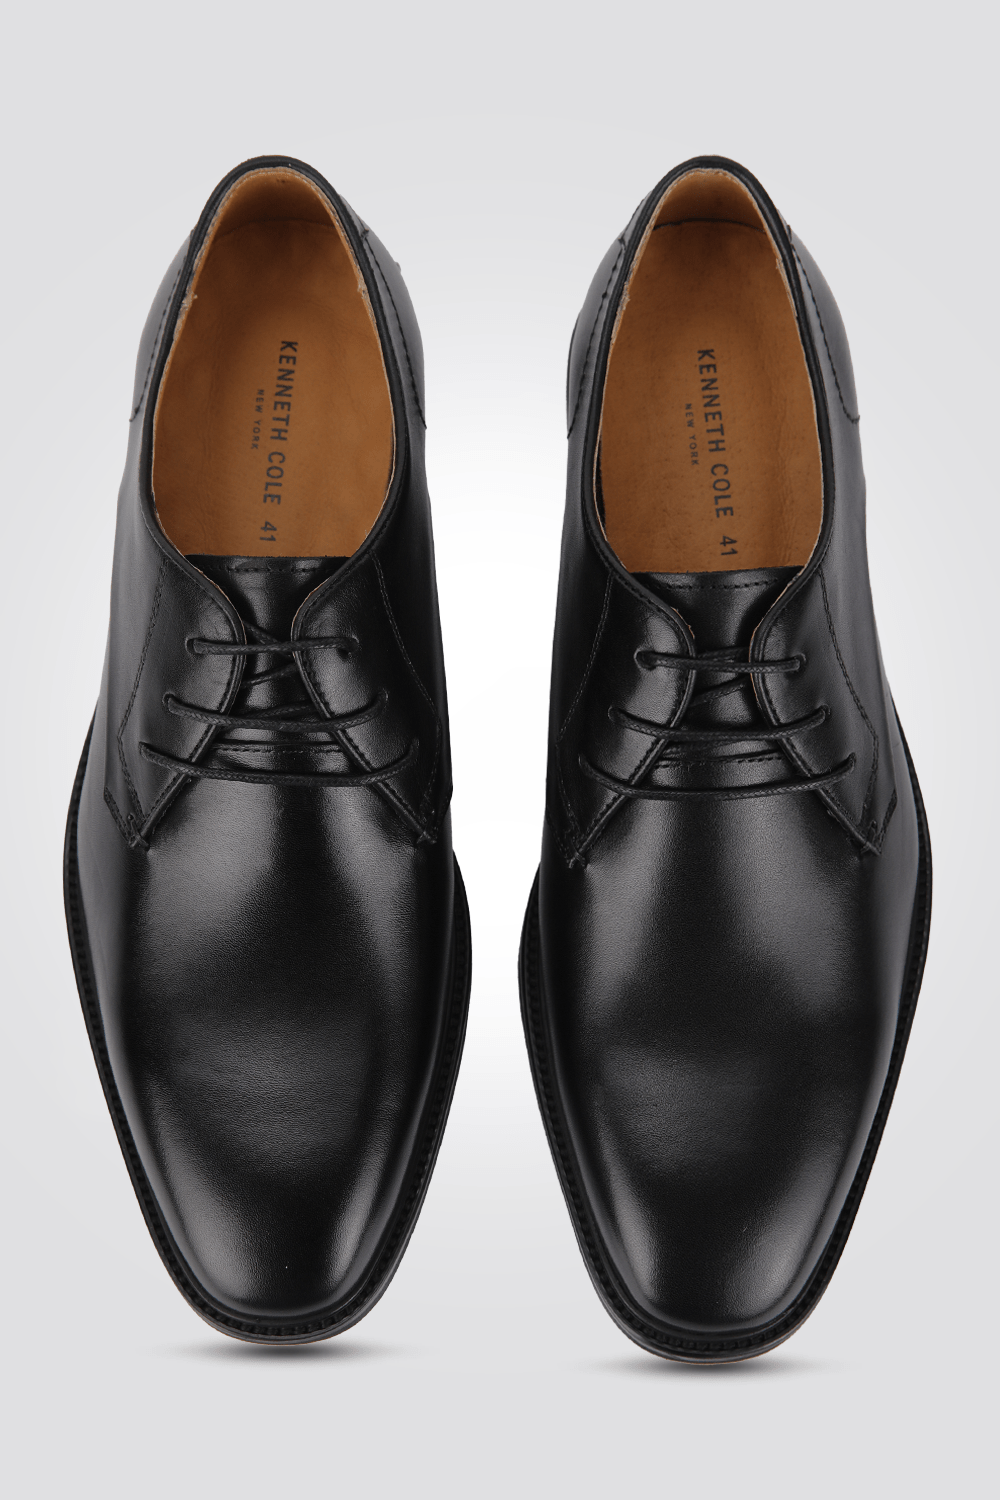 KENNETH COLE - נעליים אלגנטיות מעור לגברים בצבע שחור עם שרוכים - MASHBIR//365